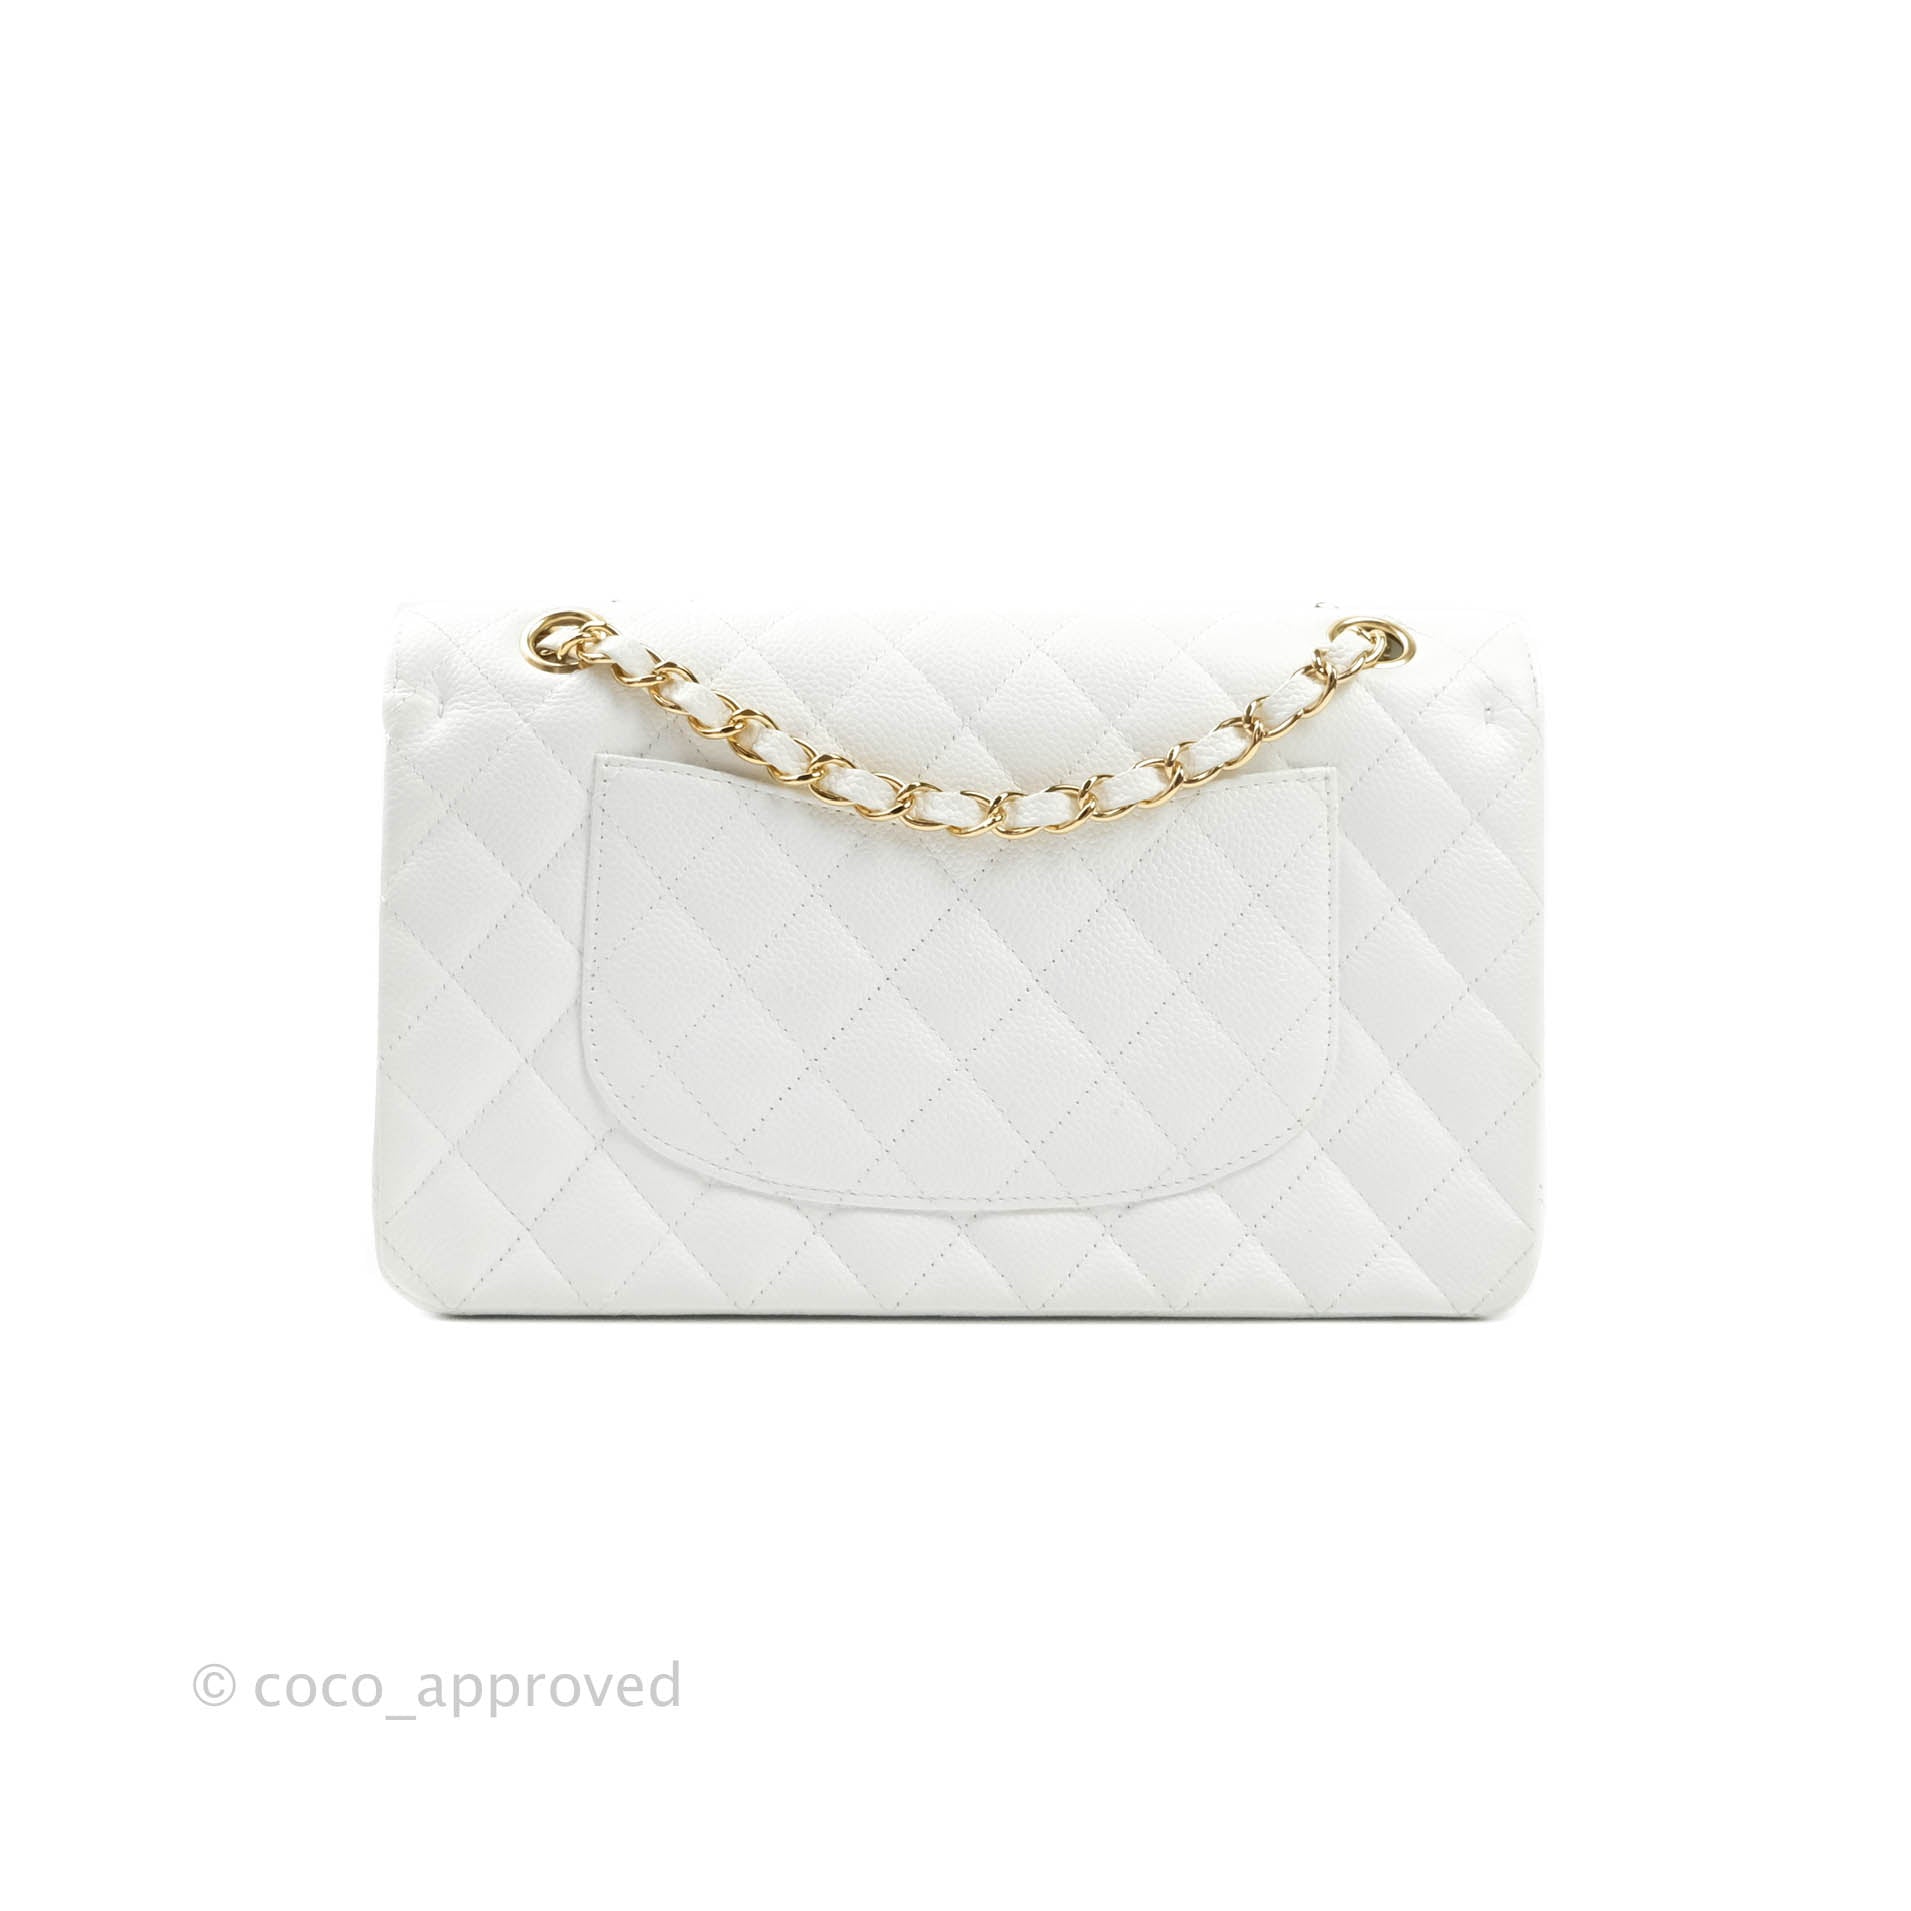 chanel white leather purse handbag